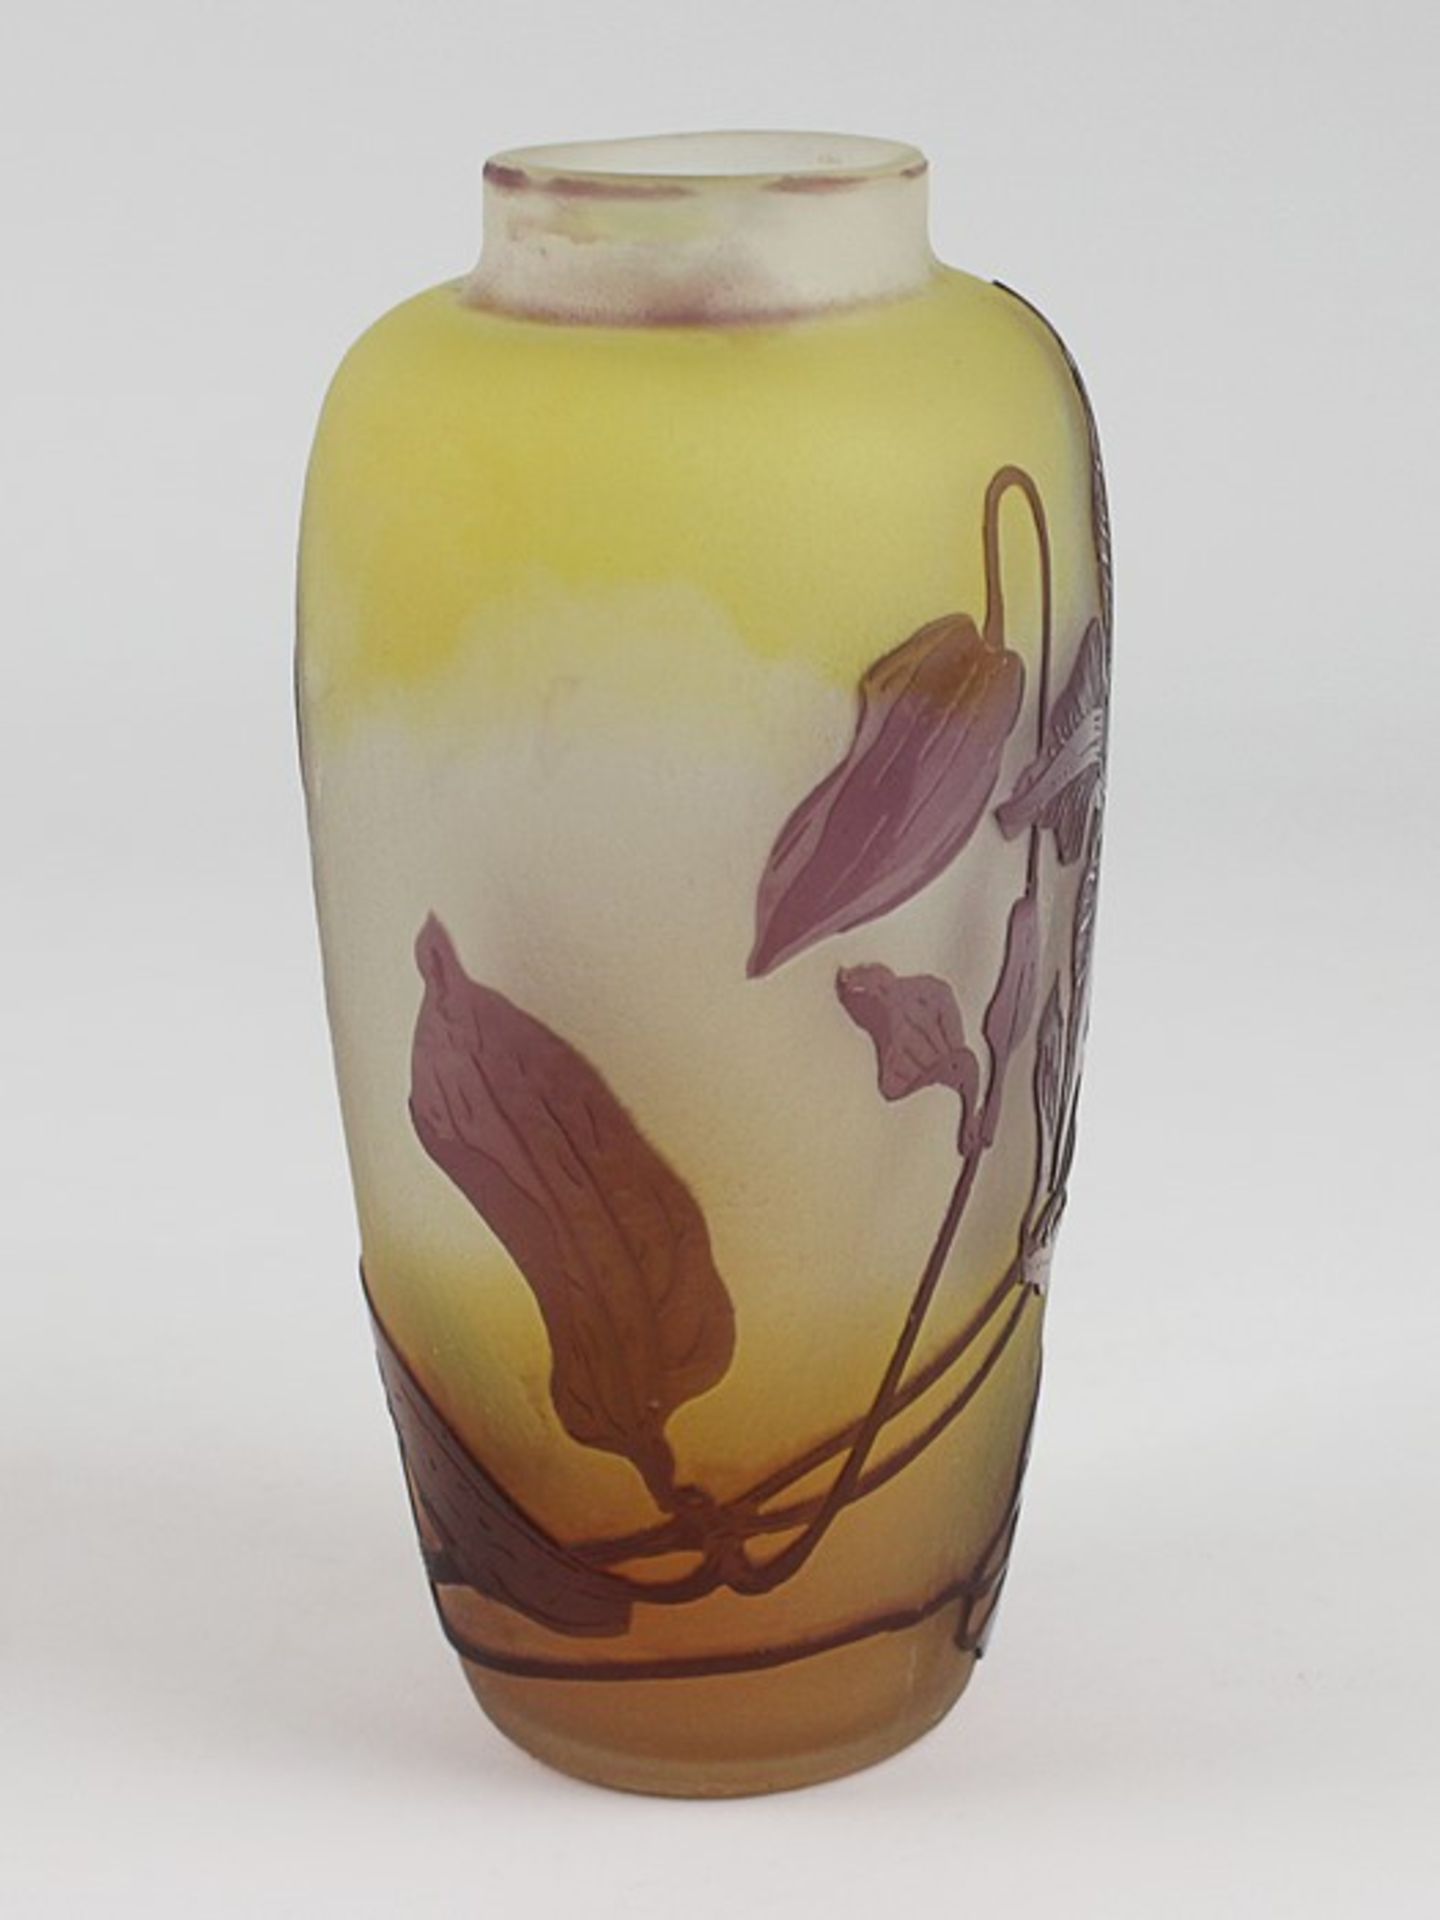 Gallé - Vase1920, Jugendstil, Emile Gallé, Frankreich, farbloses Glas, runder Stand, ovoider, leicht - Bild 3 aus 6